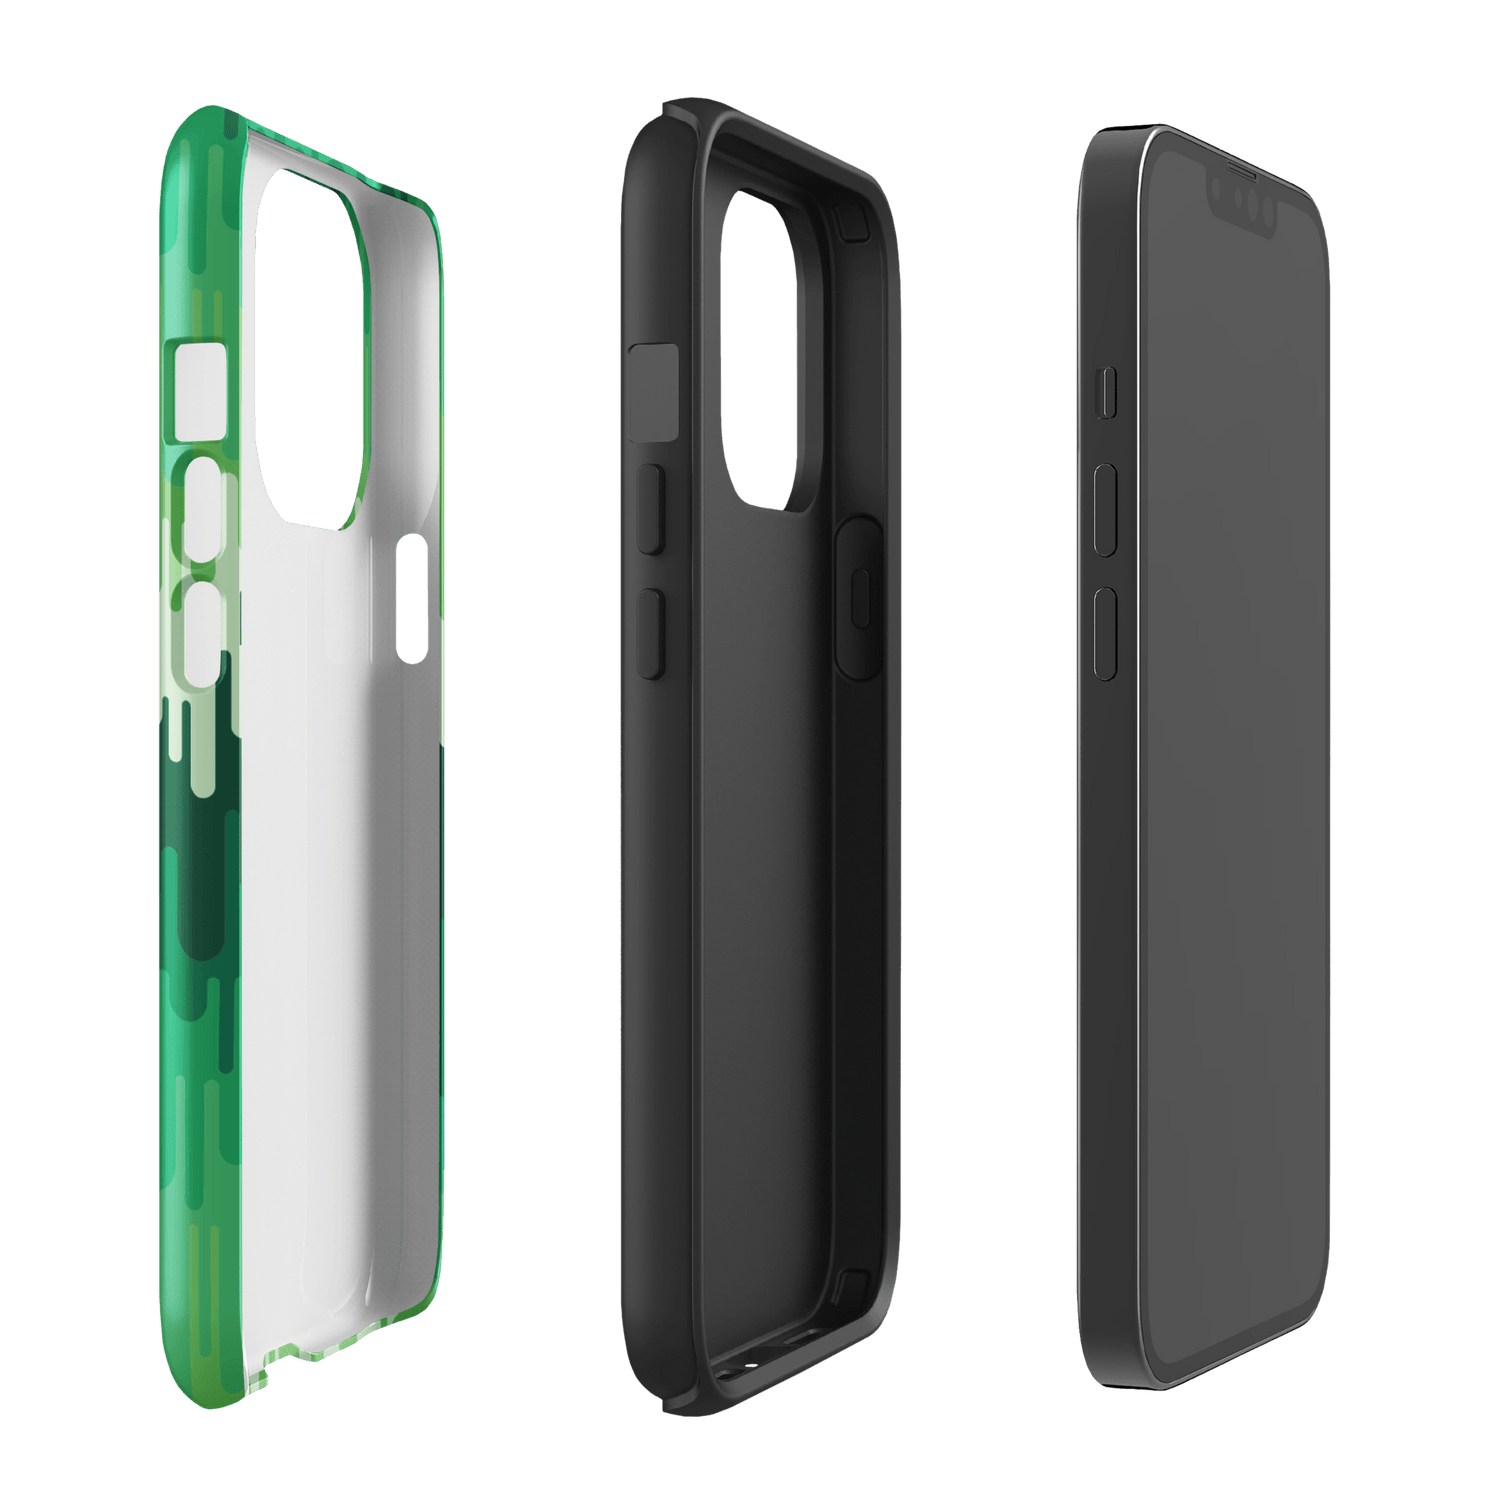 Slime Ombre Green Tough Phone Case - iPhone - Paramount Shop